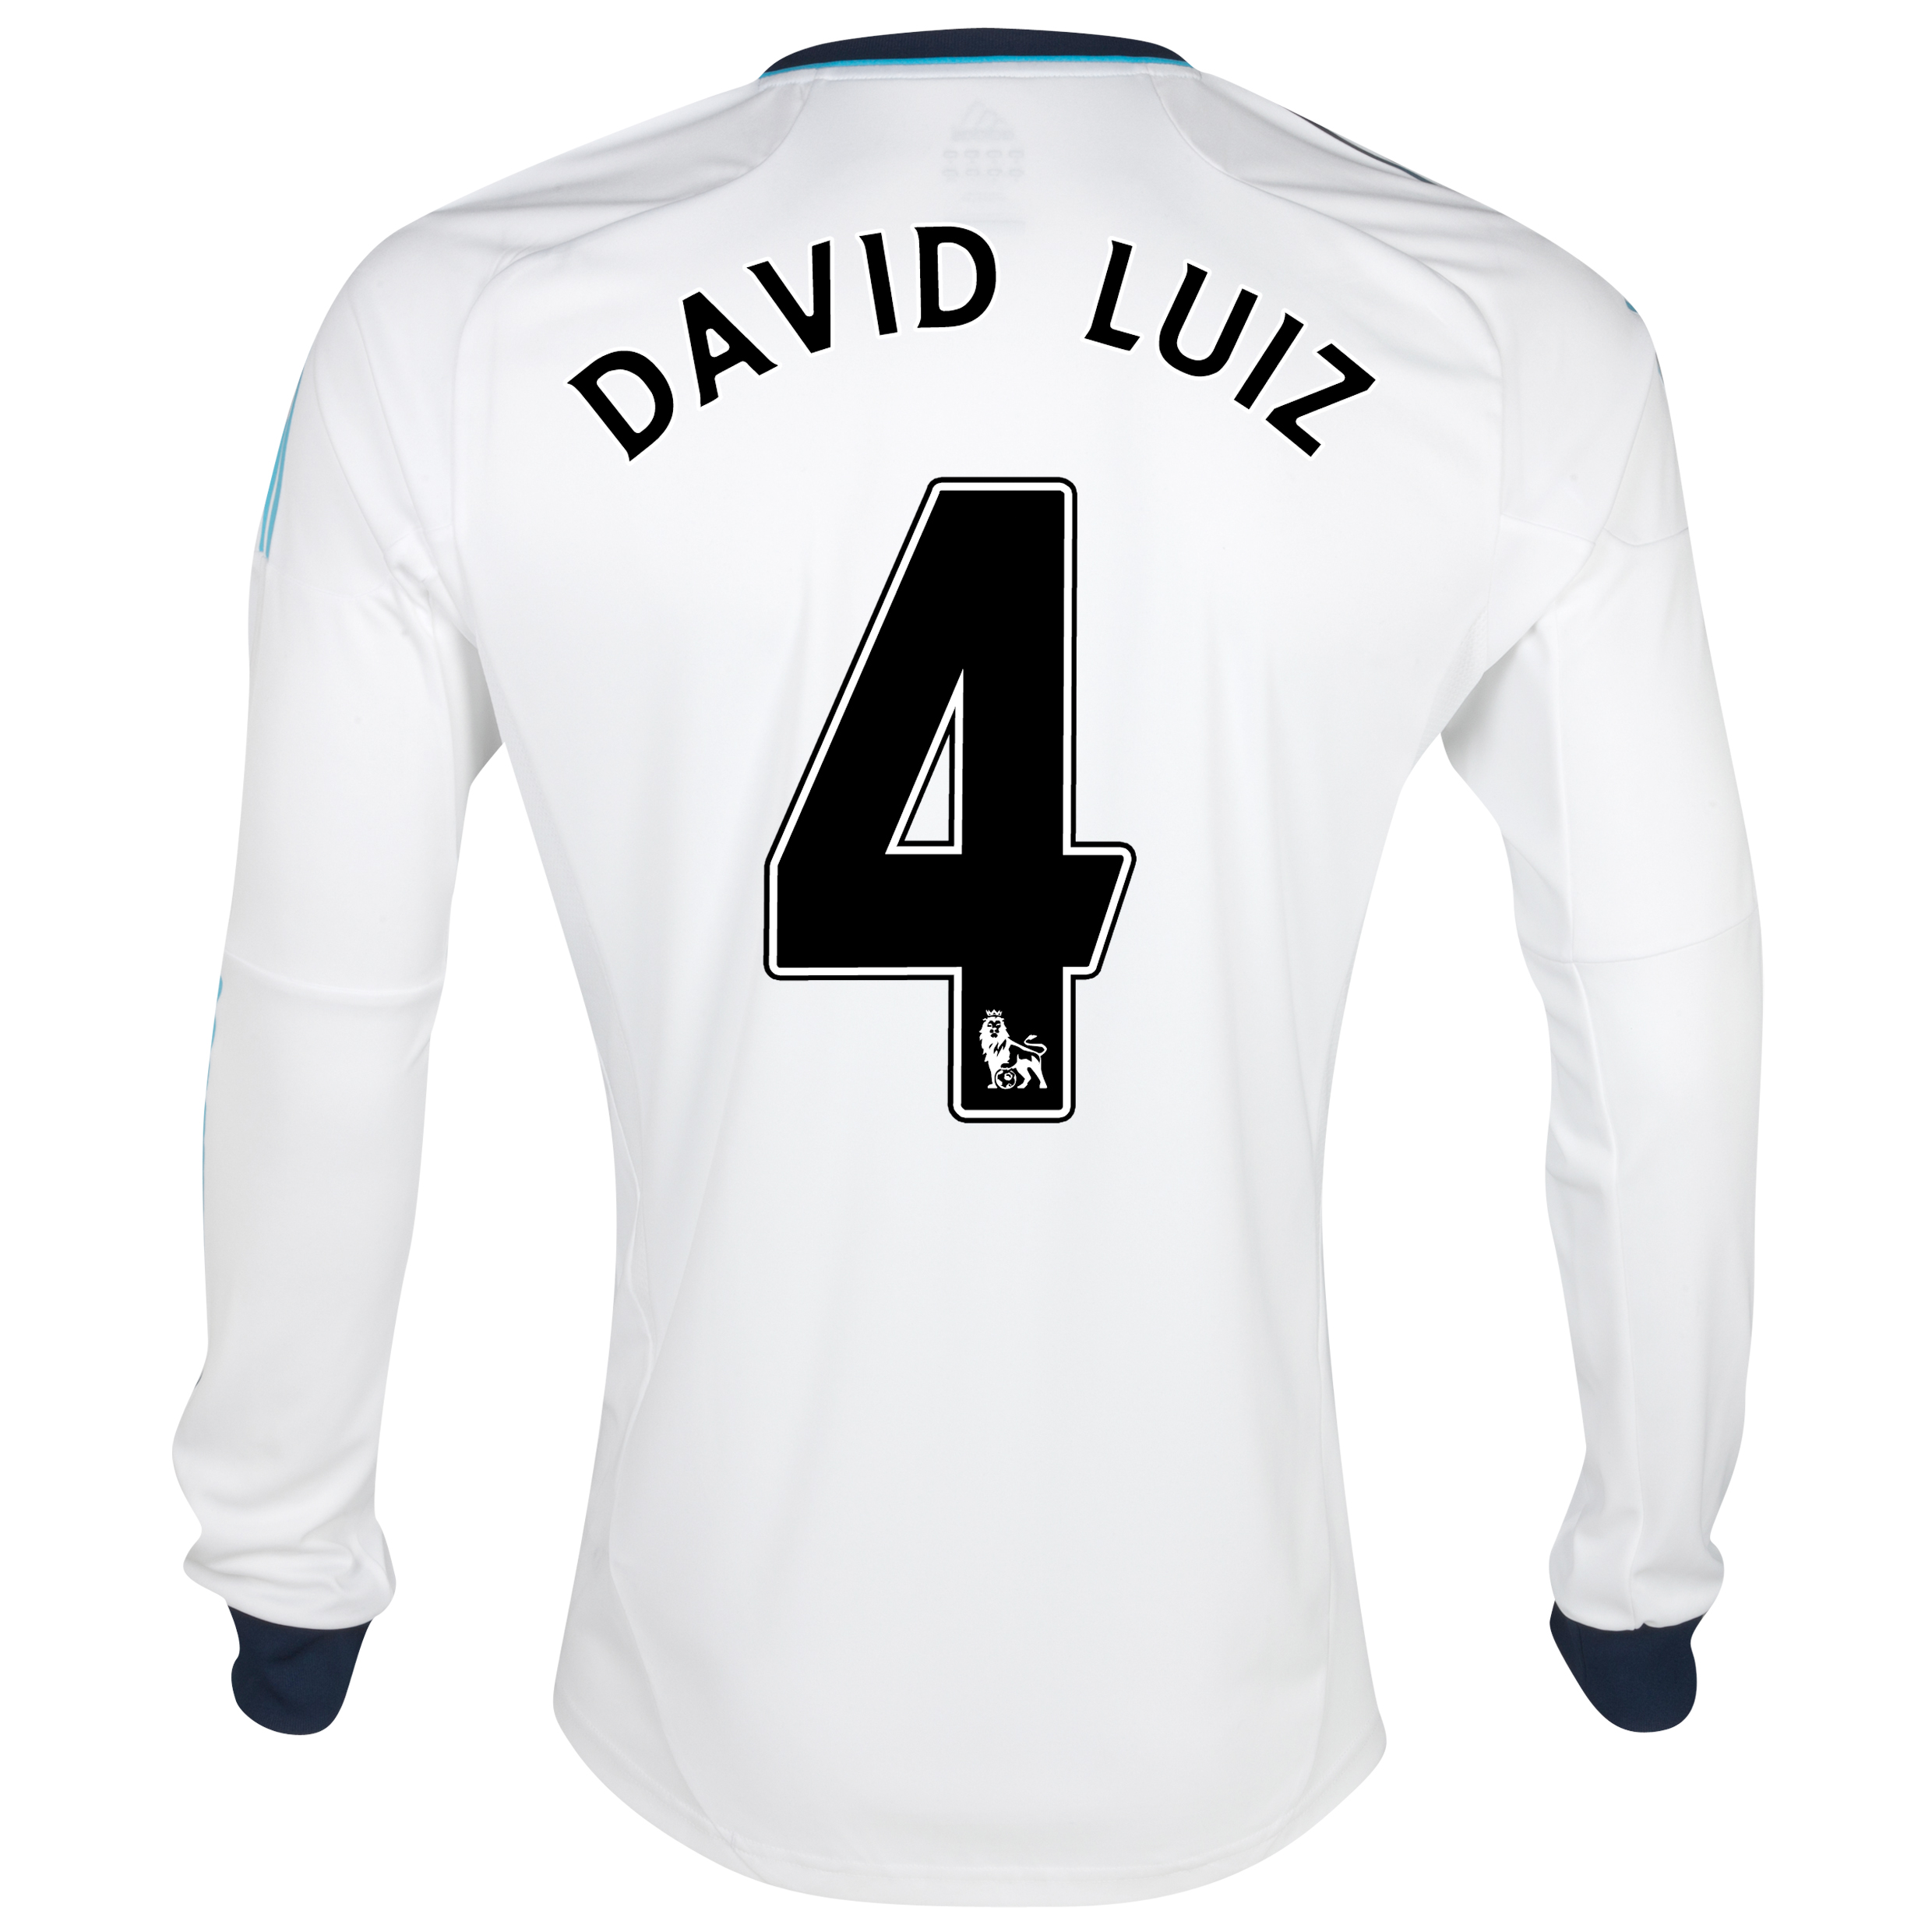 Luiz Shirt